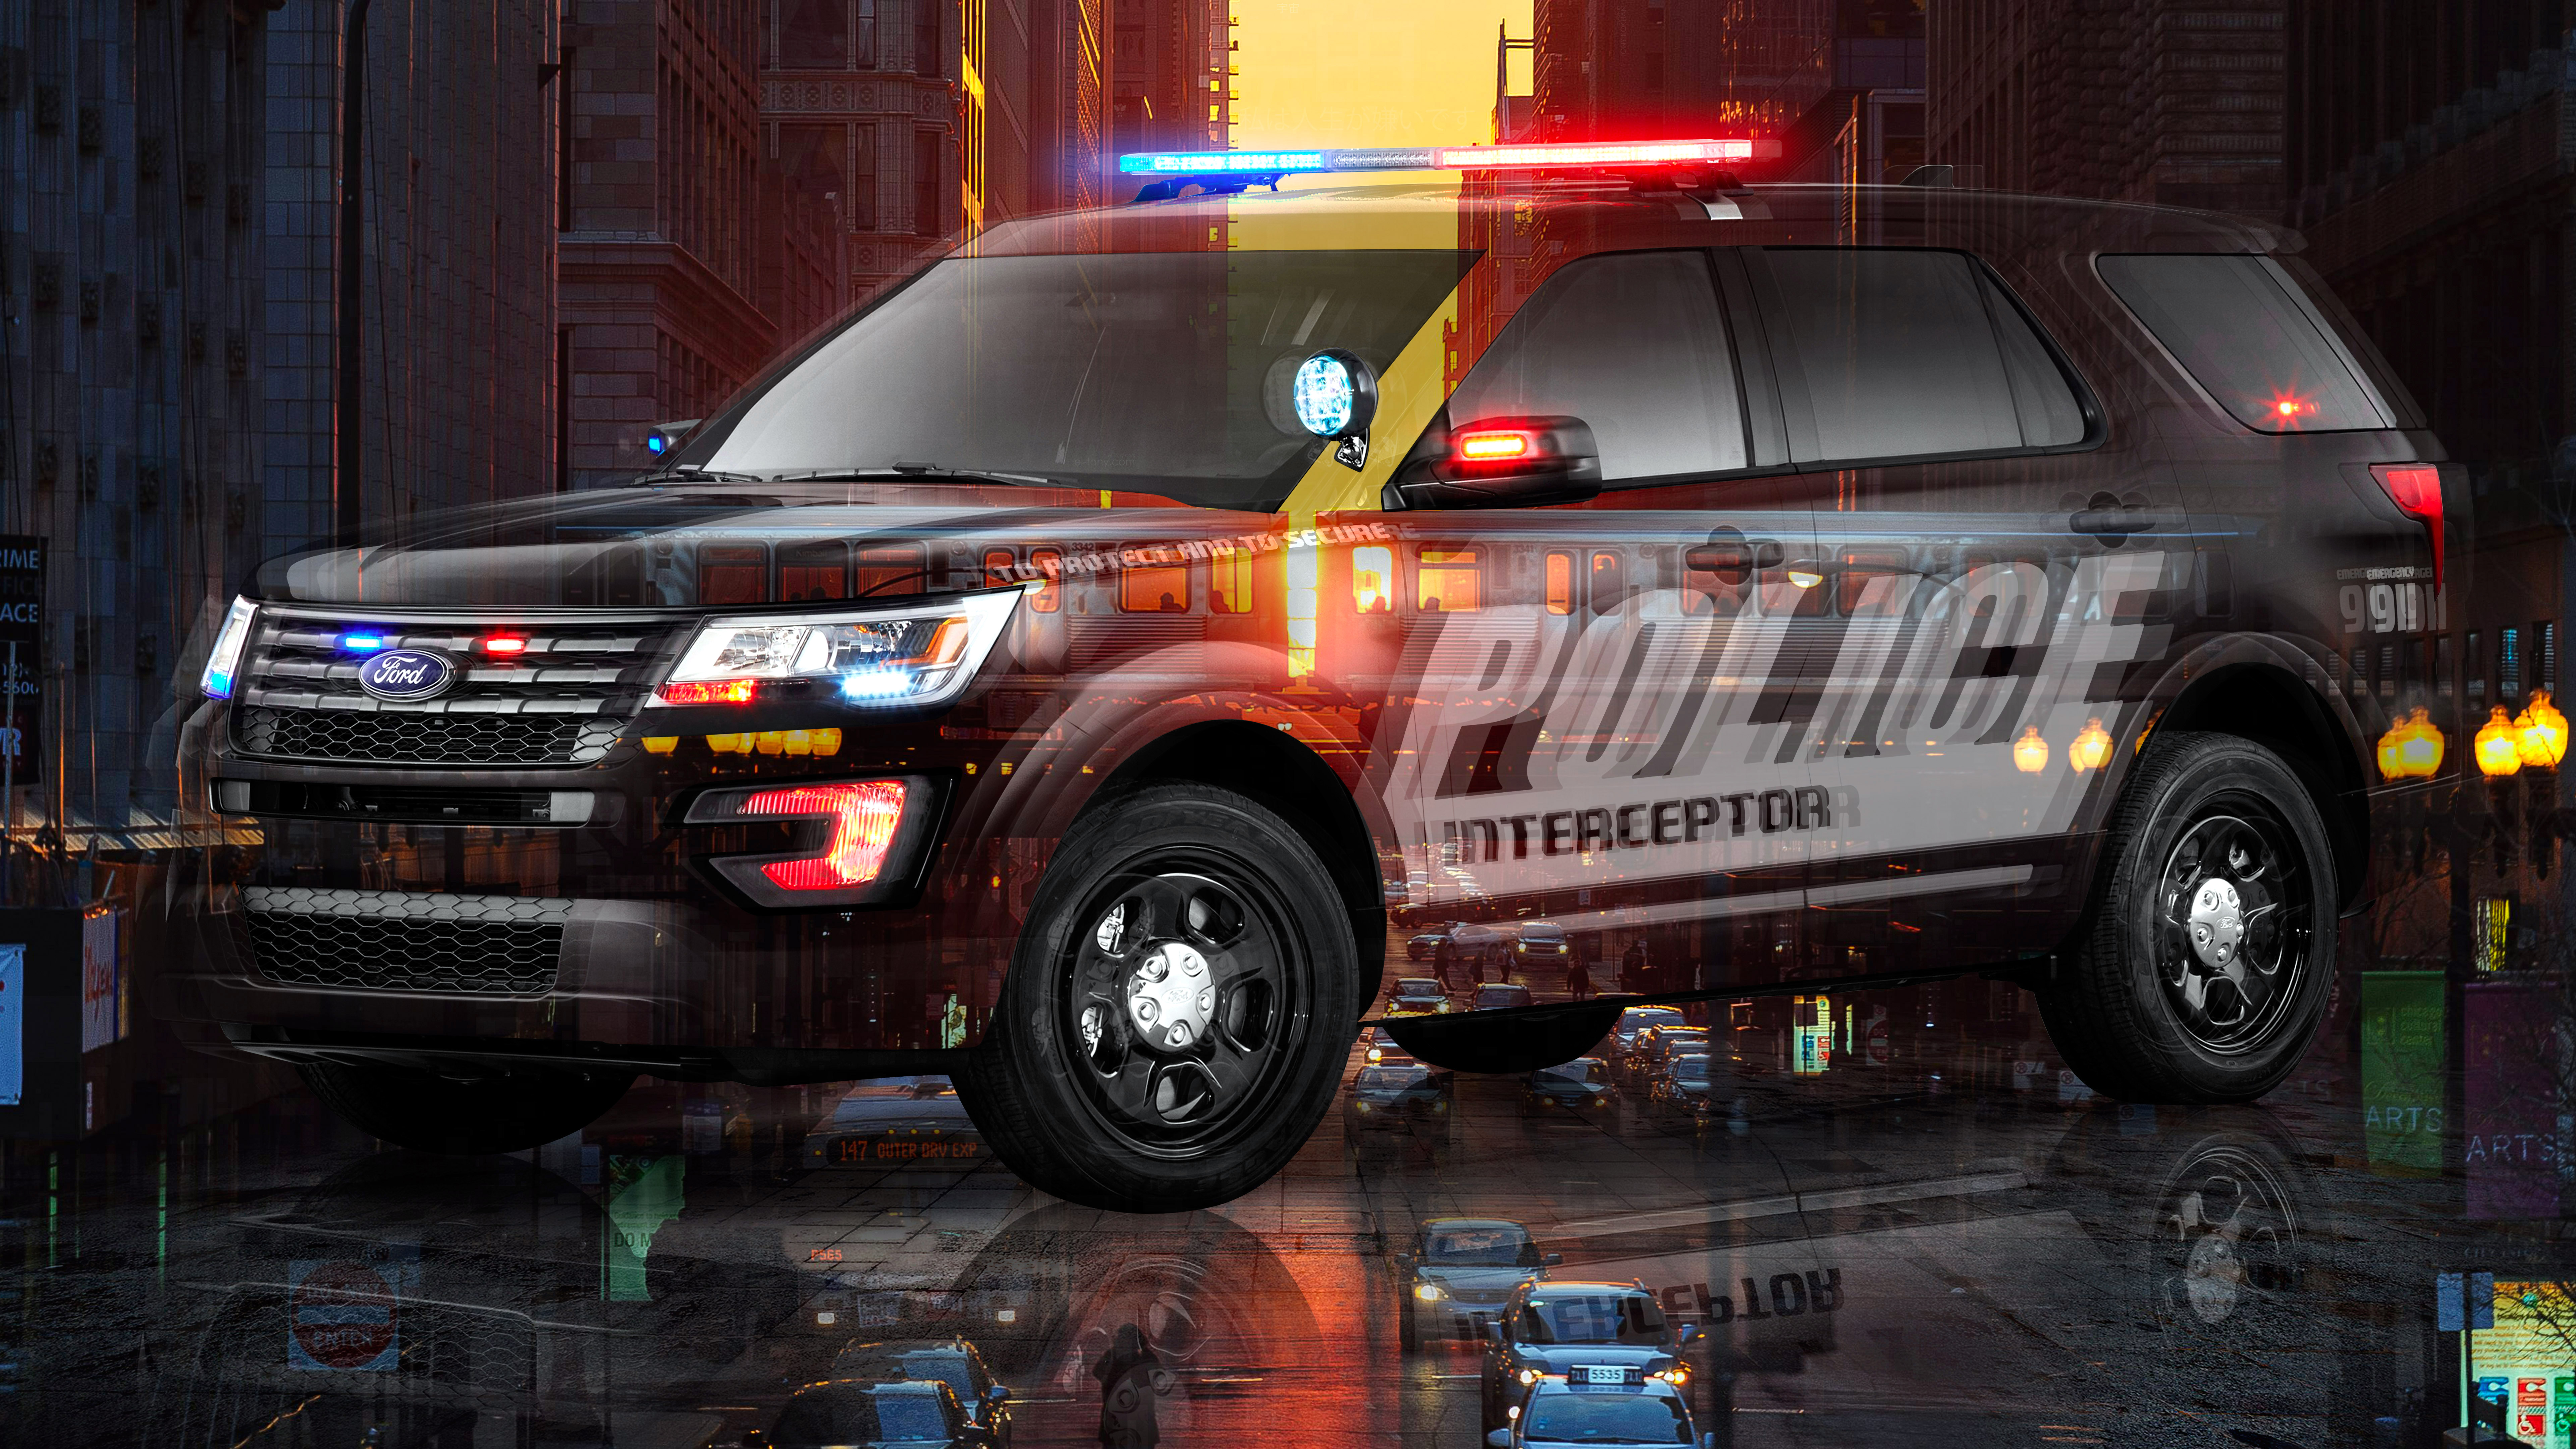 Ford-Explorer-Police-Interceptor-Emergency-911-Super-Crystal-IHateLife-Soul-Chicago-USA-Sunset-Train-Car-2023